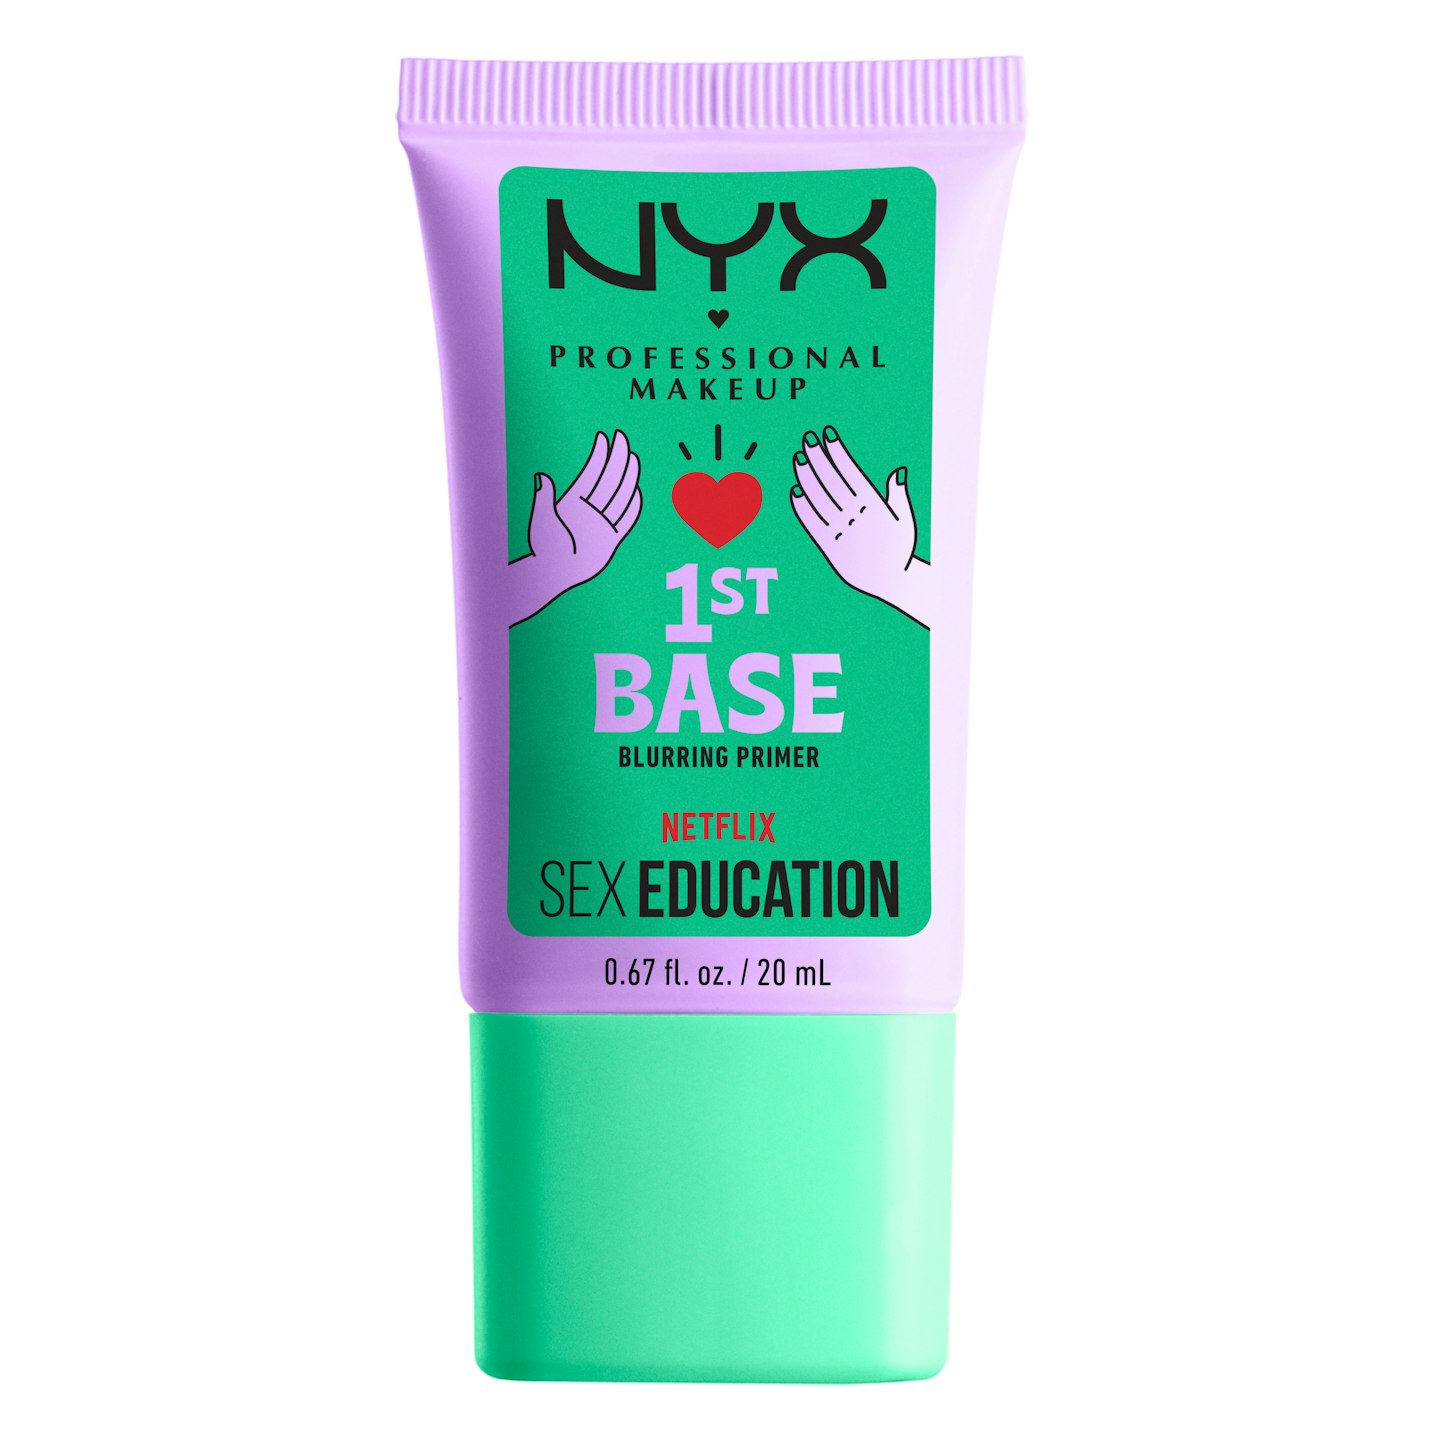 NYX Professional Makeup X Netflix's Sex Education 1st Base Blurring Primer